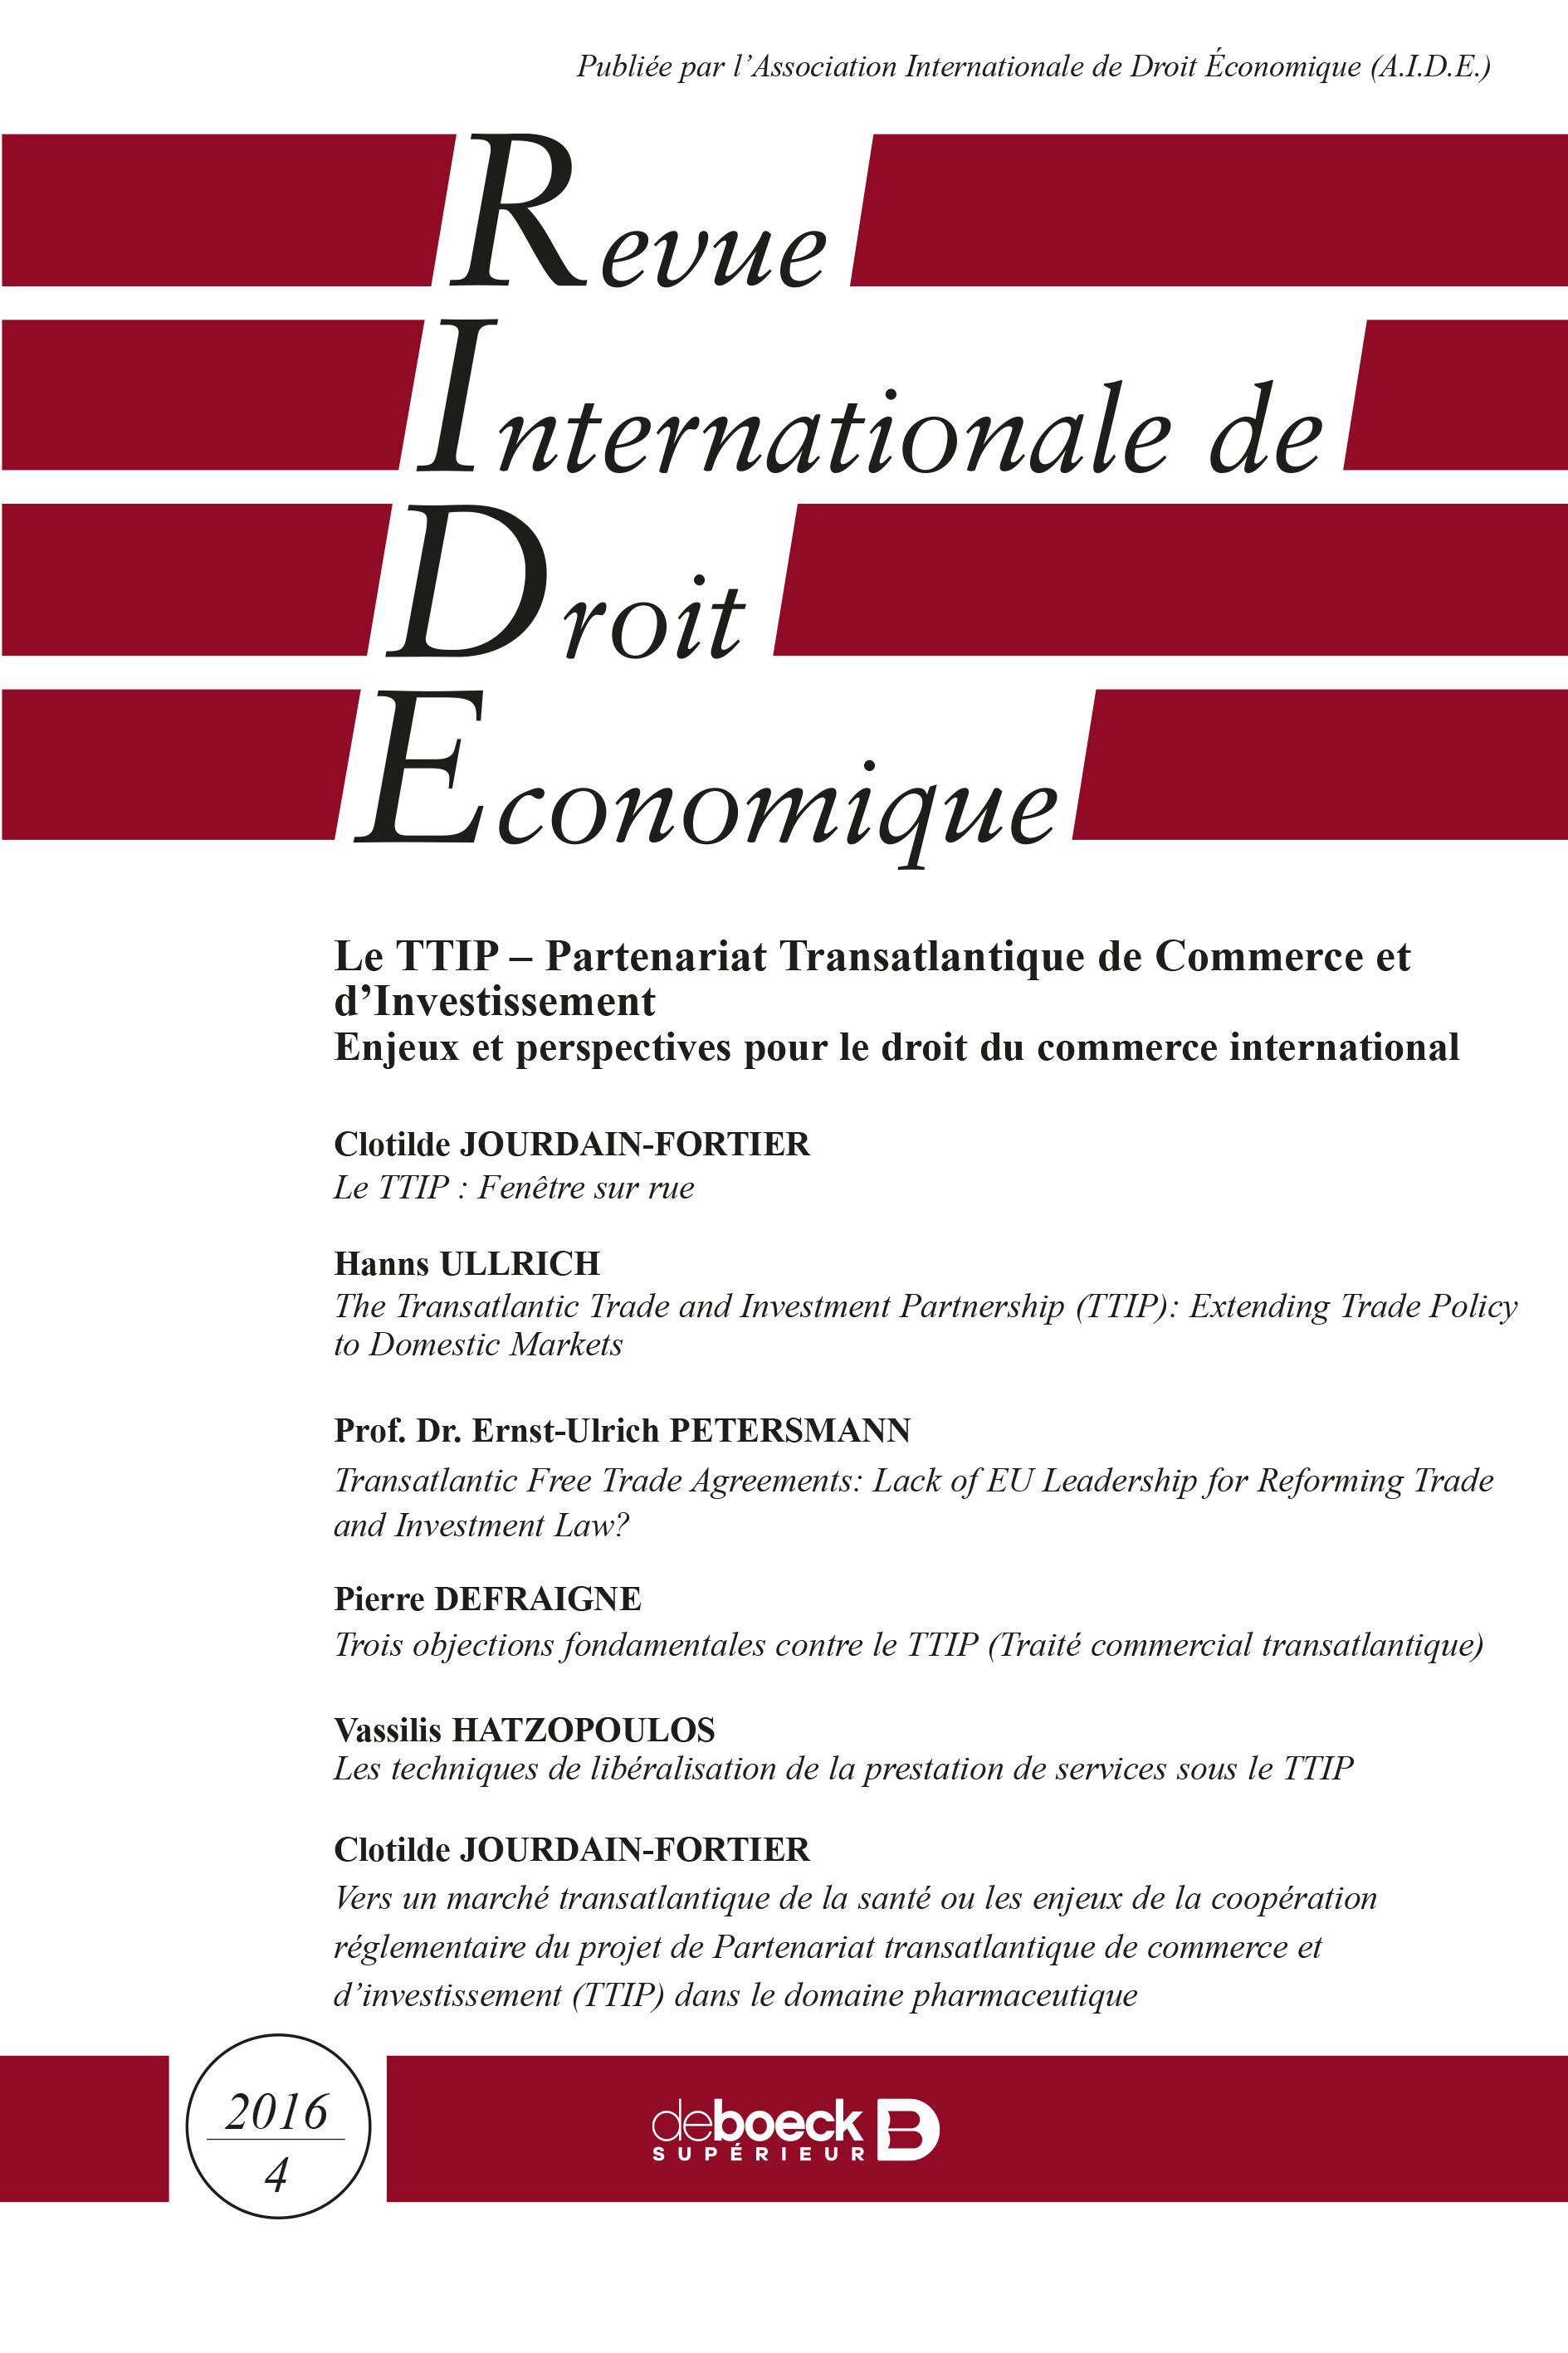 Transatlantic Trade Agreement The Transatlantic Trade And Investment Partnership Ttip